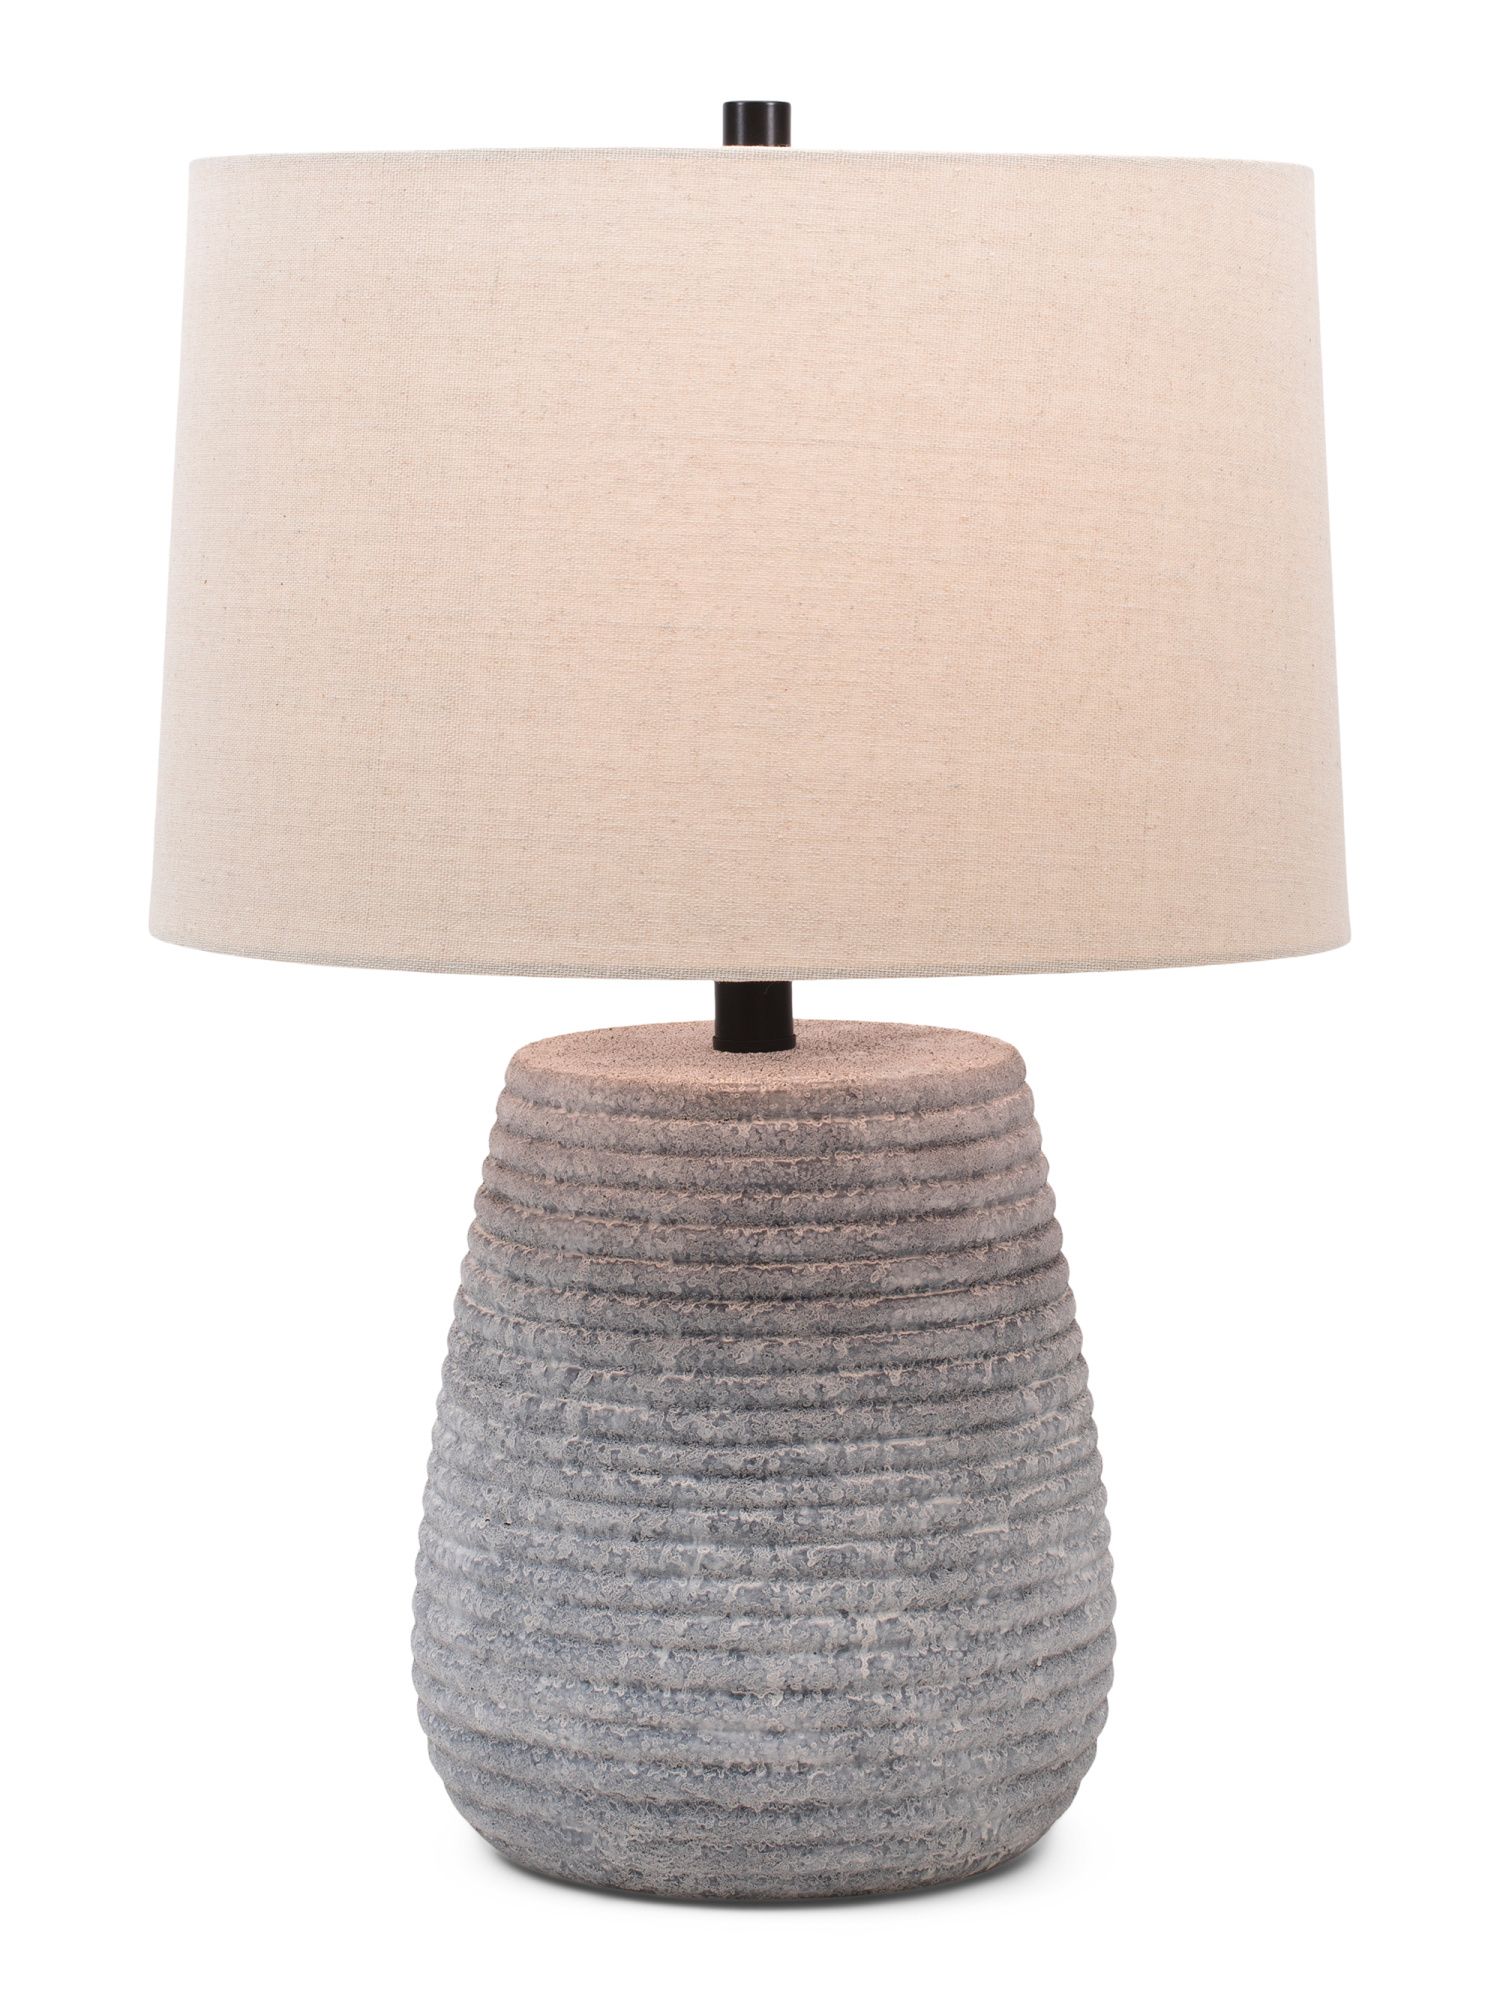 22in Emerson Table Lamp | TJ Maxx